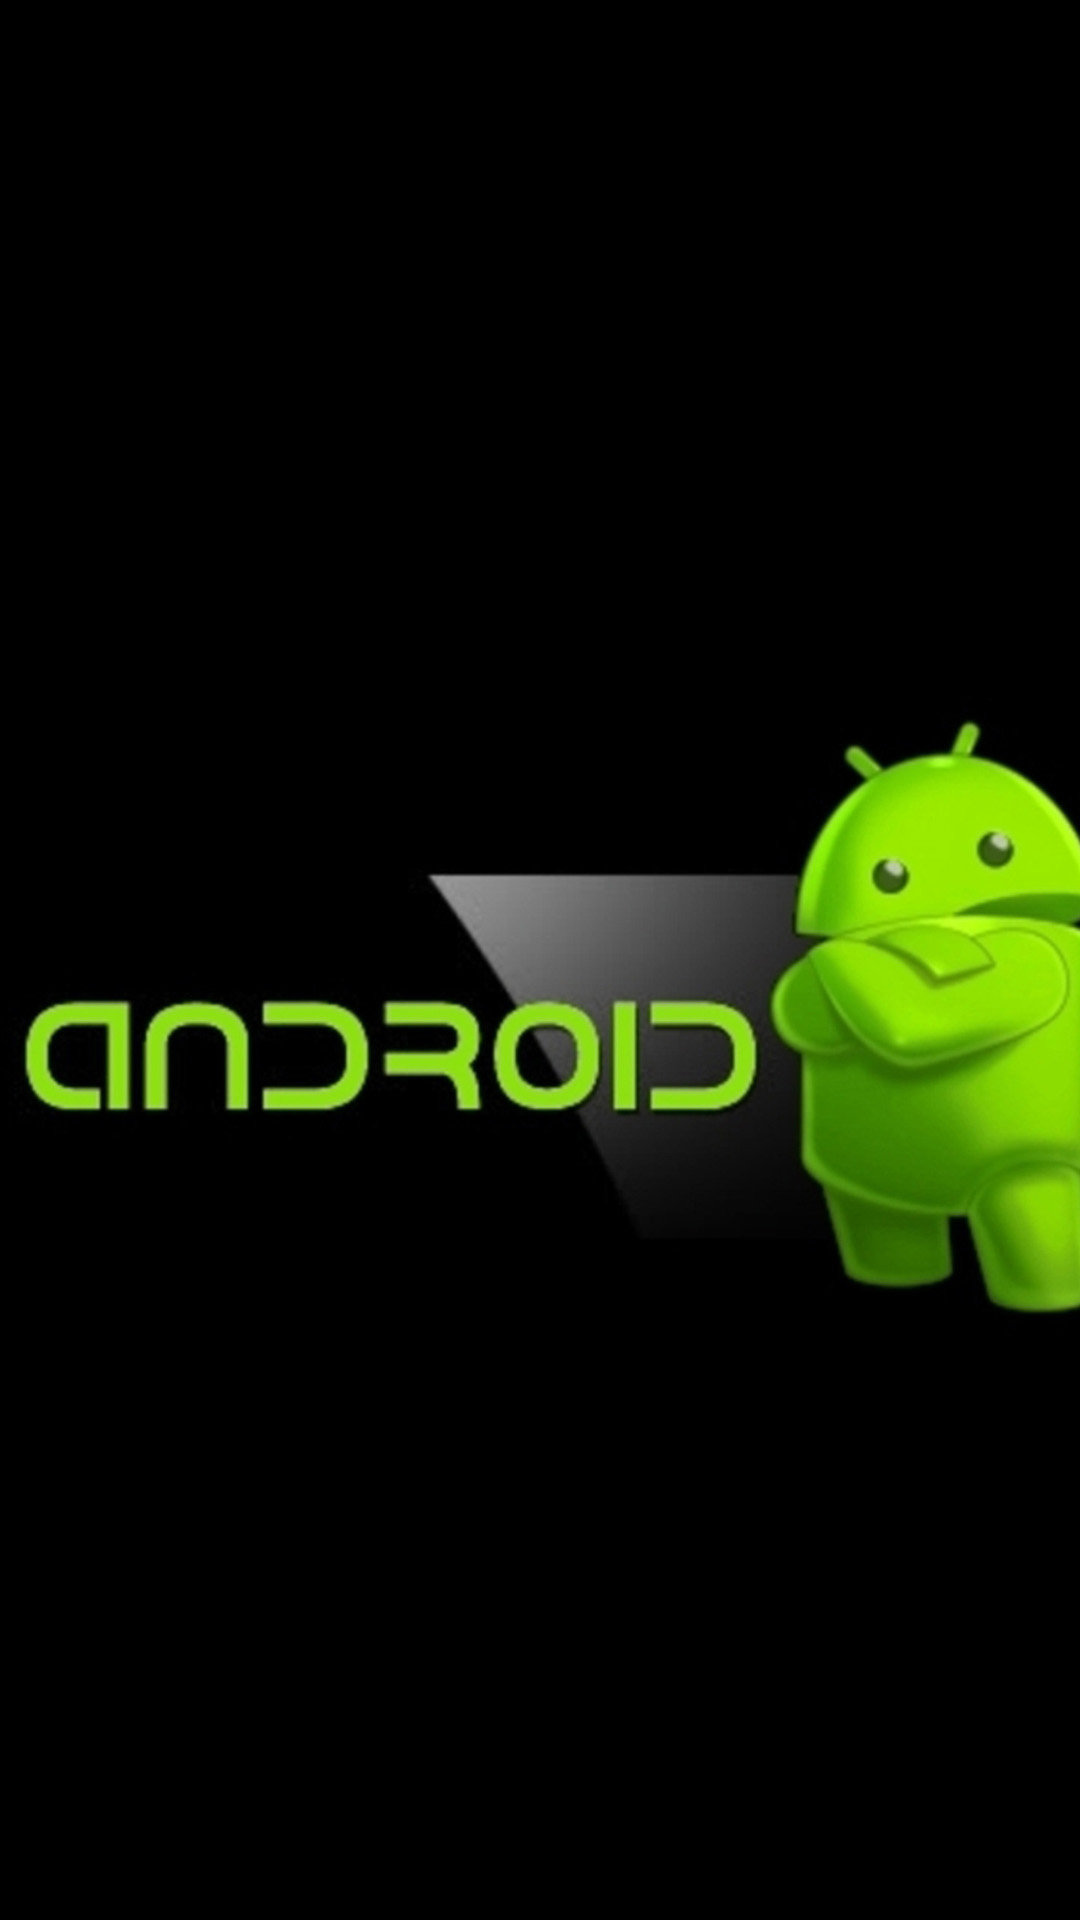 Green Android Logo Galaxy S5 Wallpaper HD